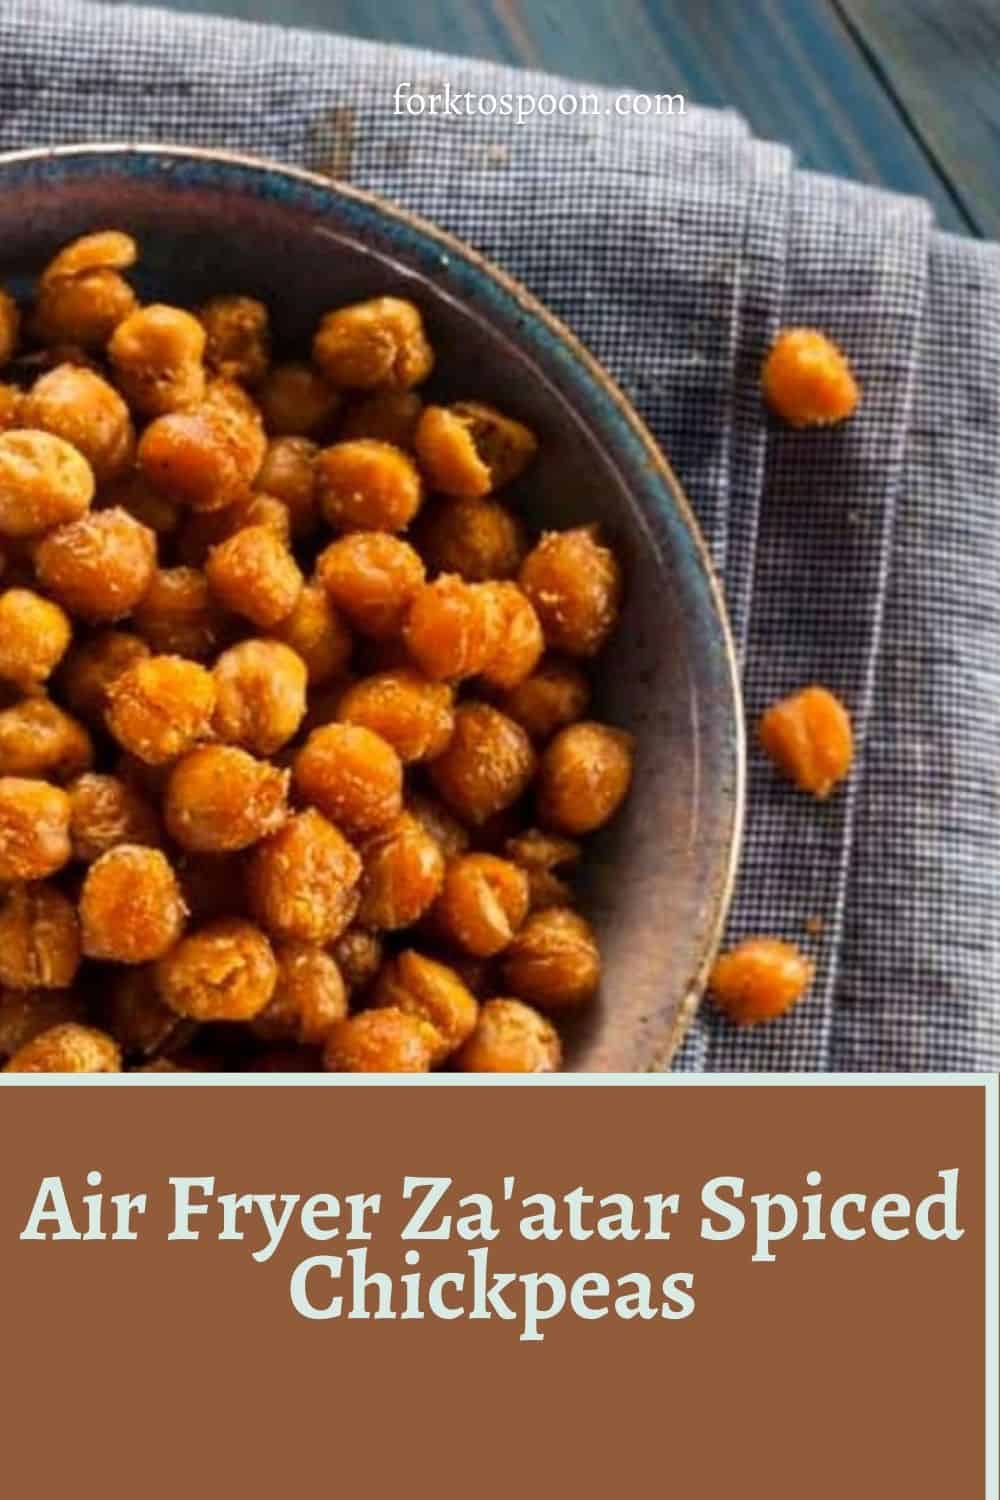 Air Fryer Za'atar Spiced Chickpeas